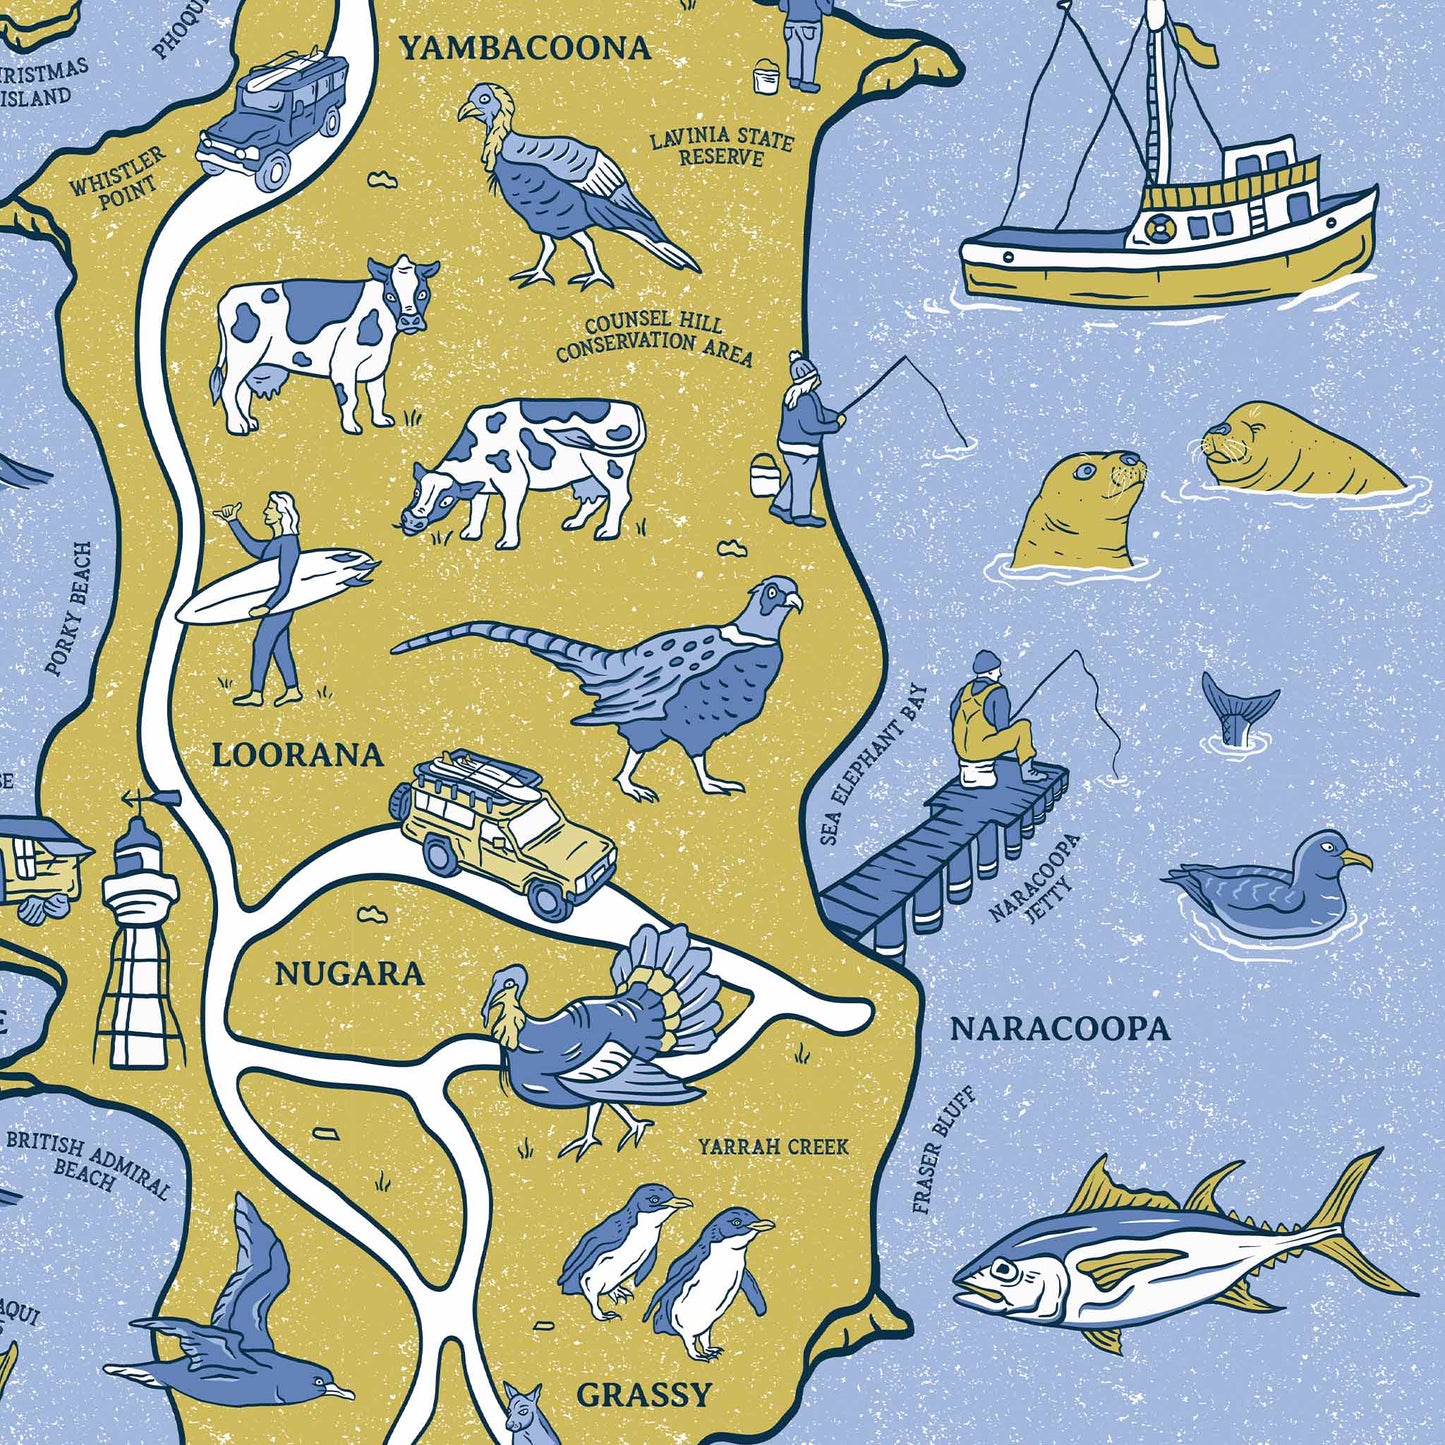 King Island | Illustrated Map